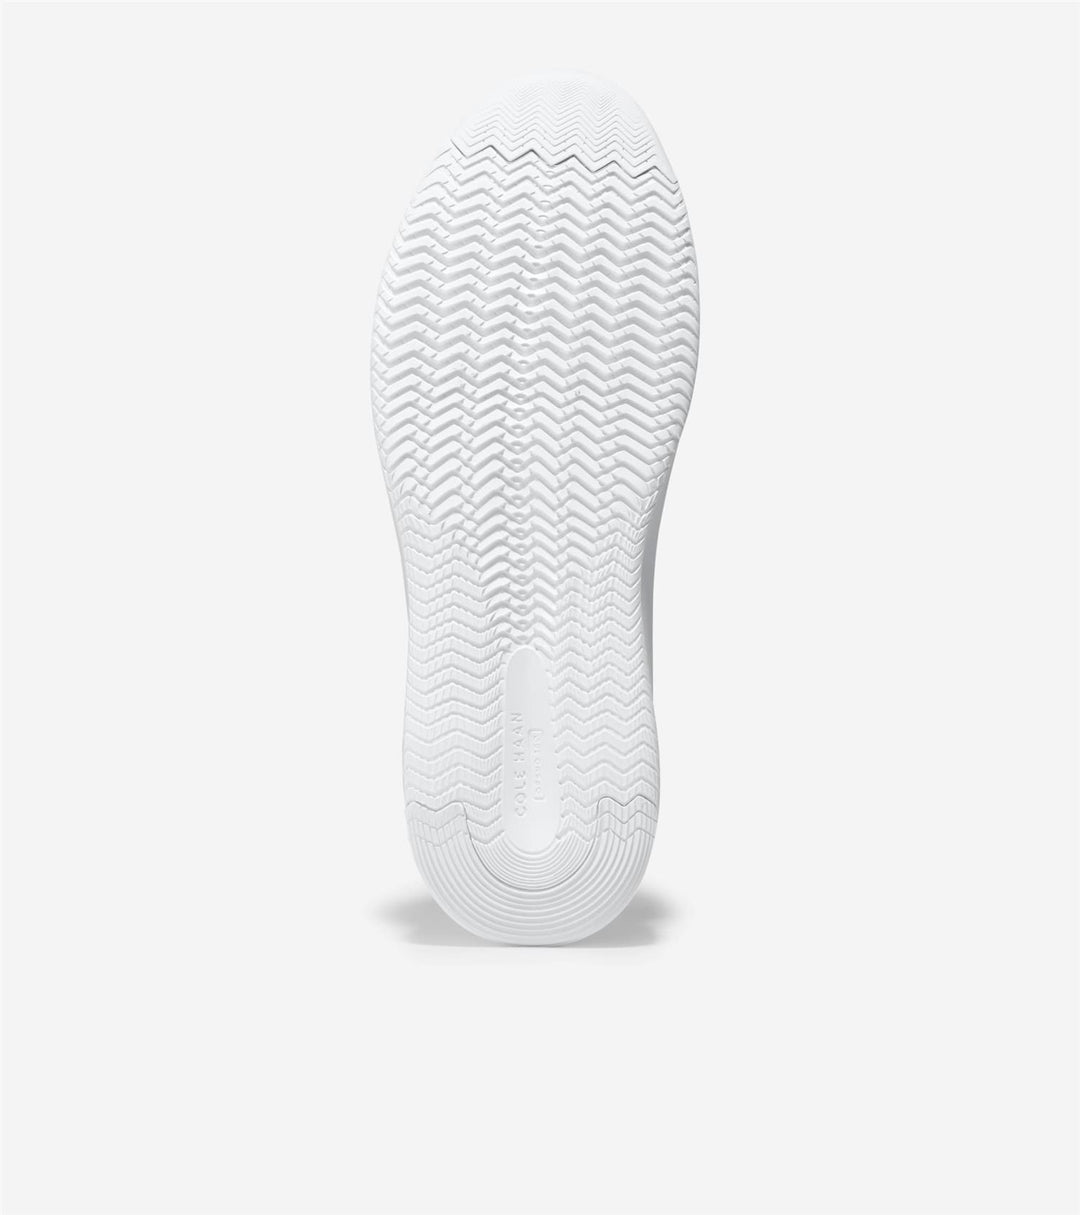 GrandPro Topspin Sneaker Optical White